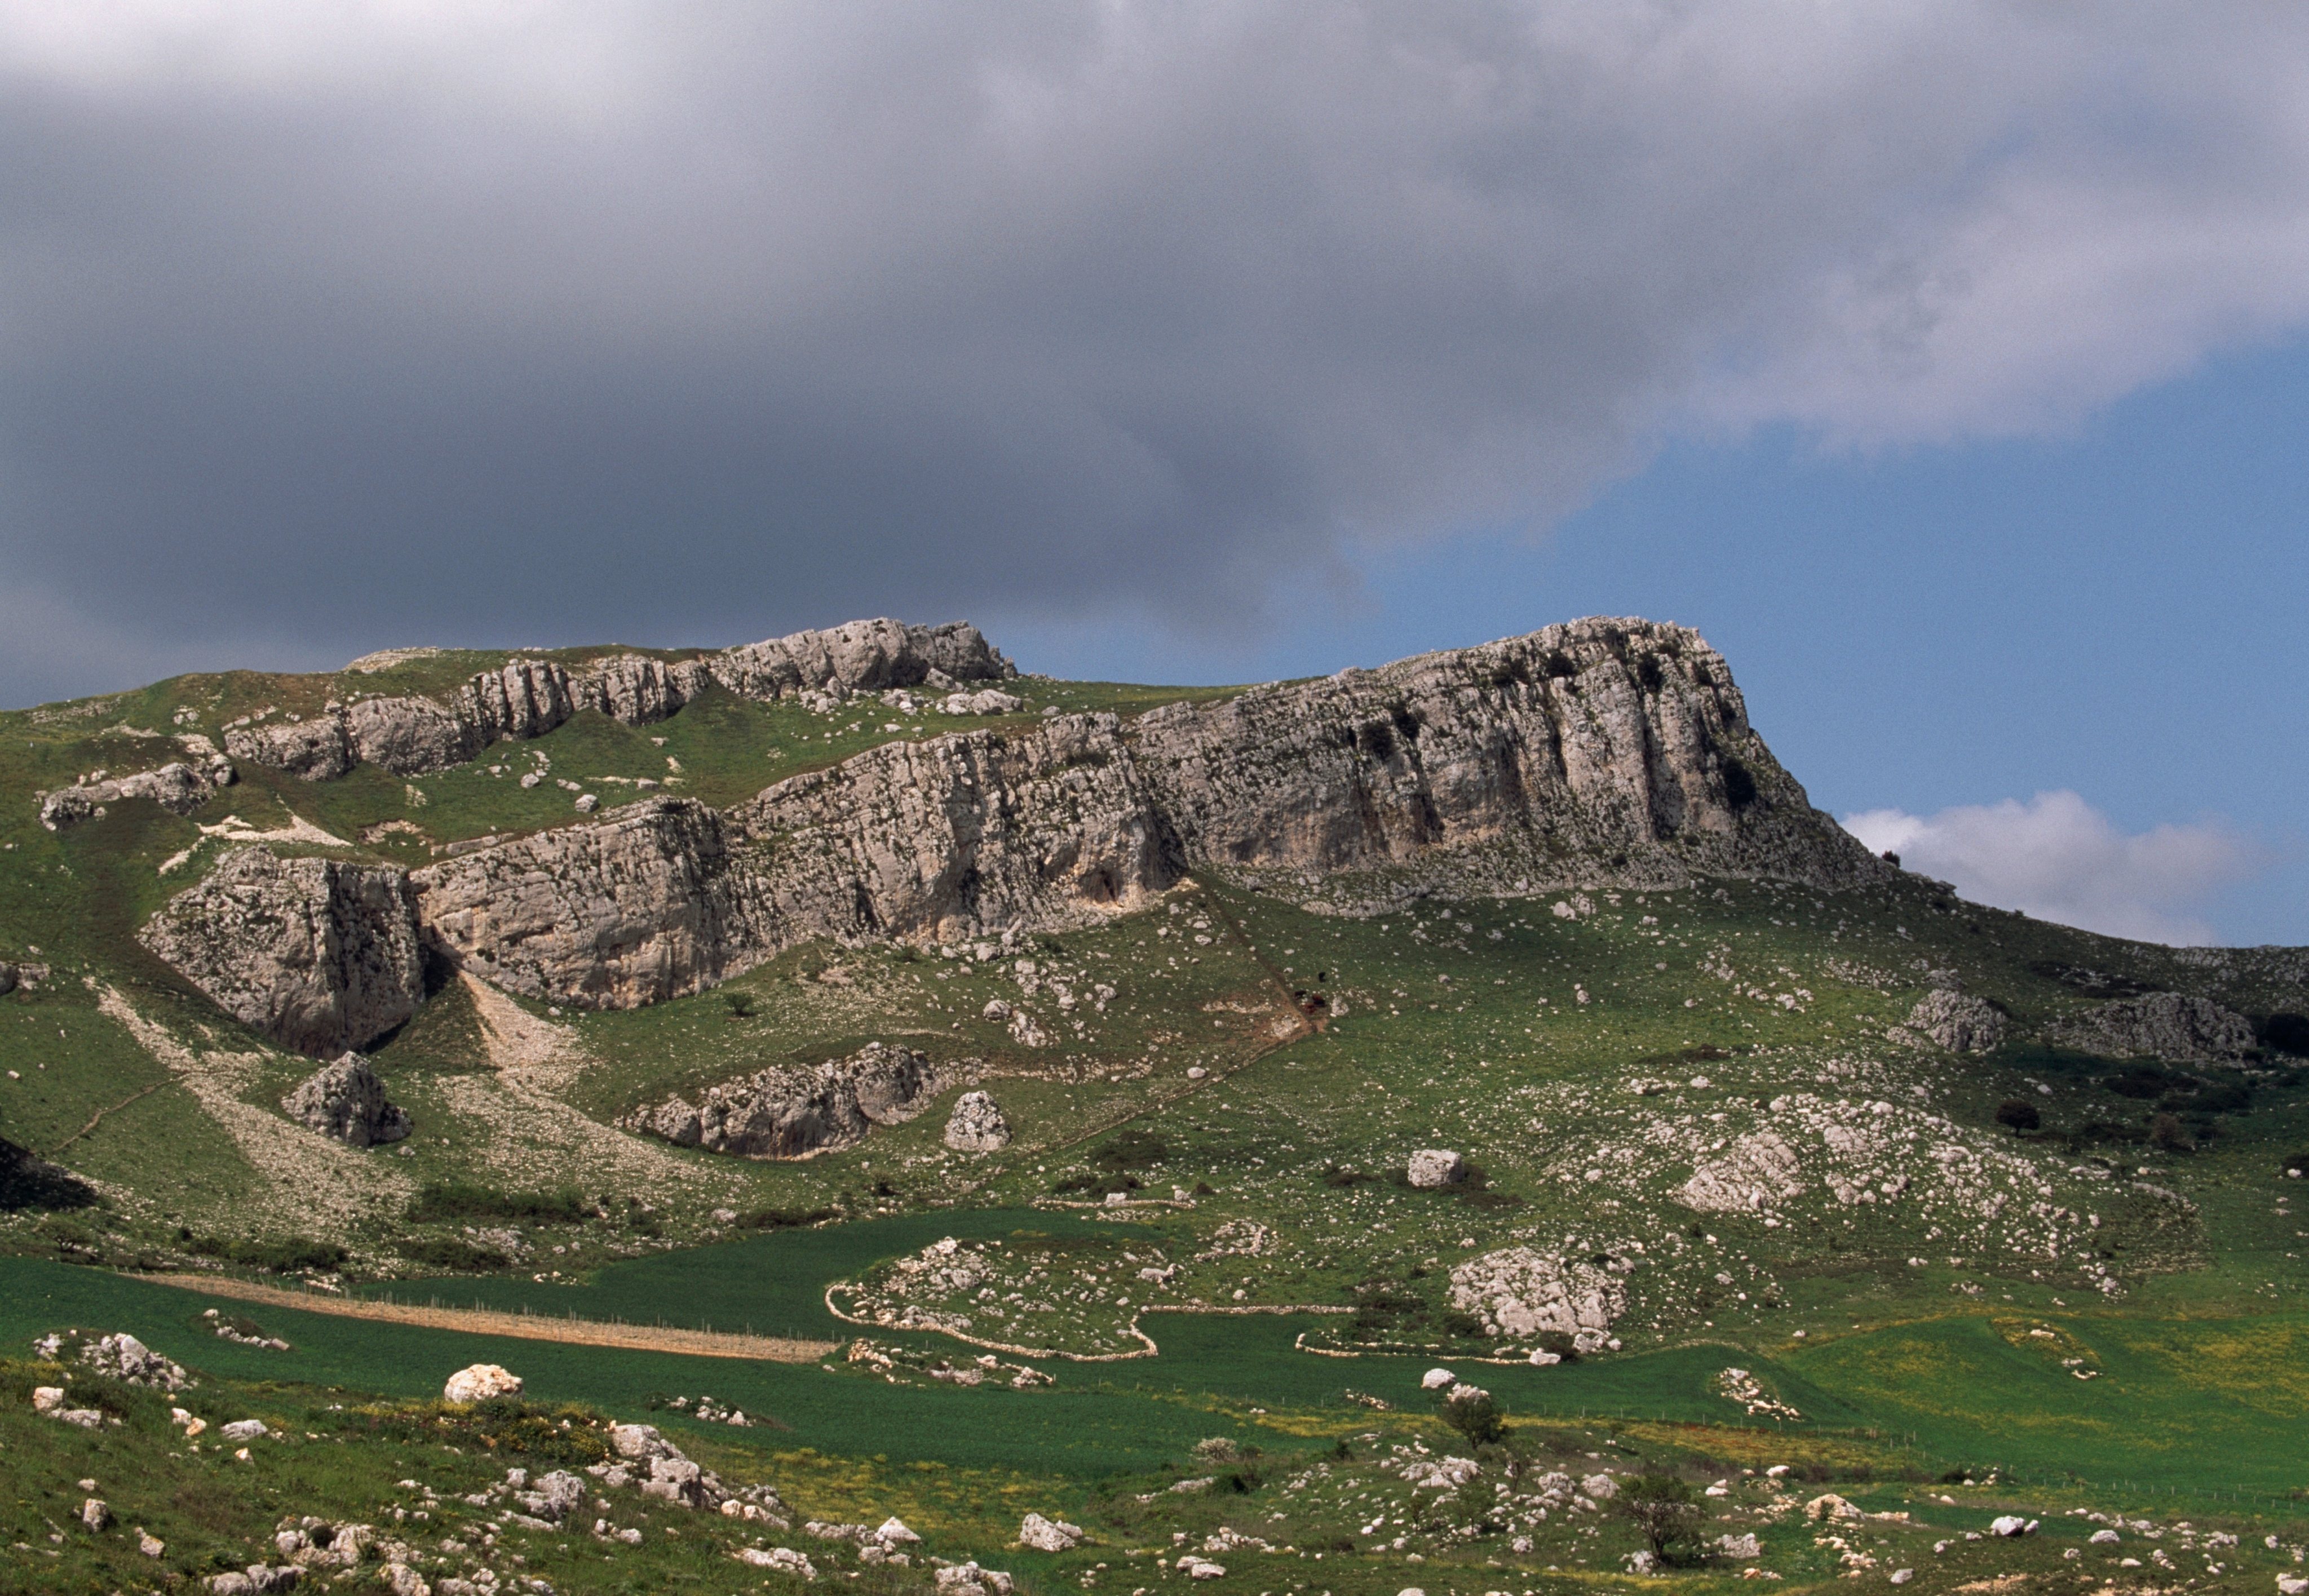 View of Mount Adranone, Adragna